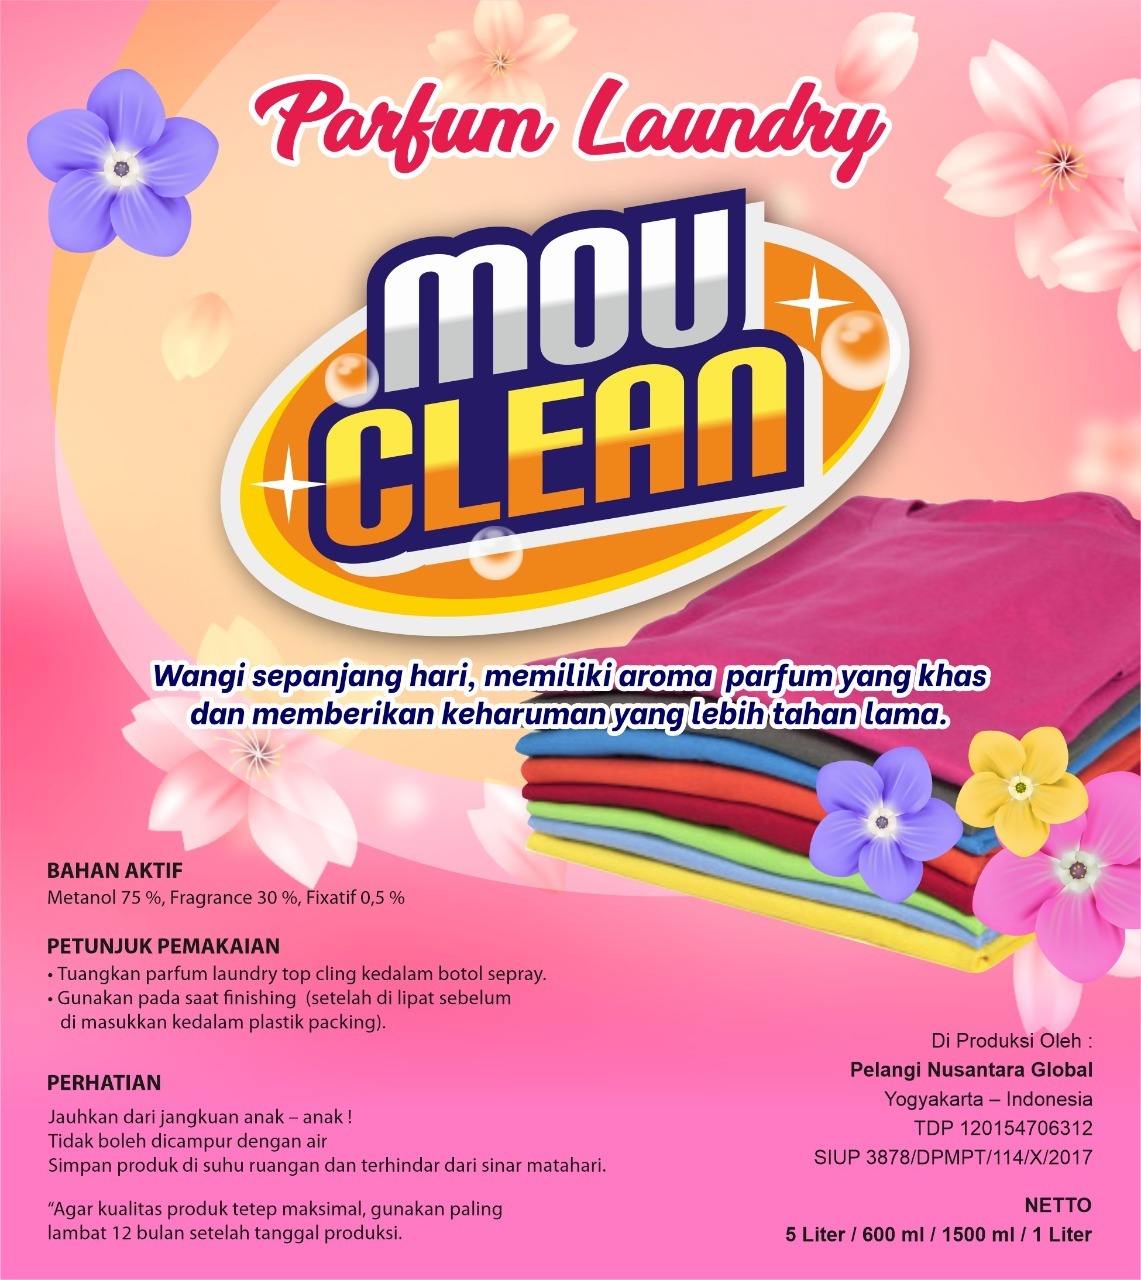 Penyedia Pewangi Pakaian Laundry Mou Clean  Di Depok